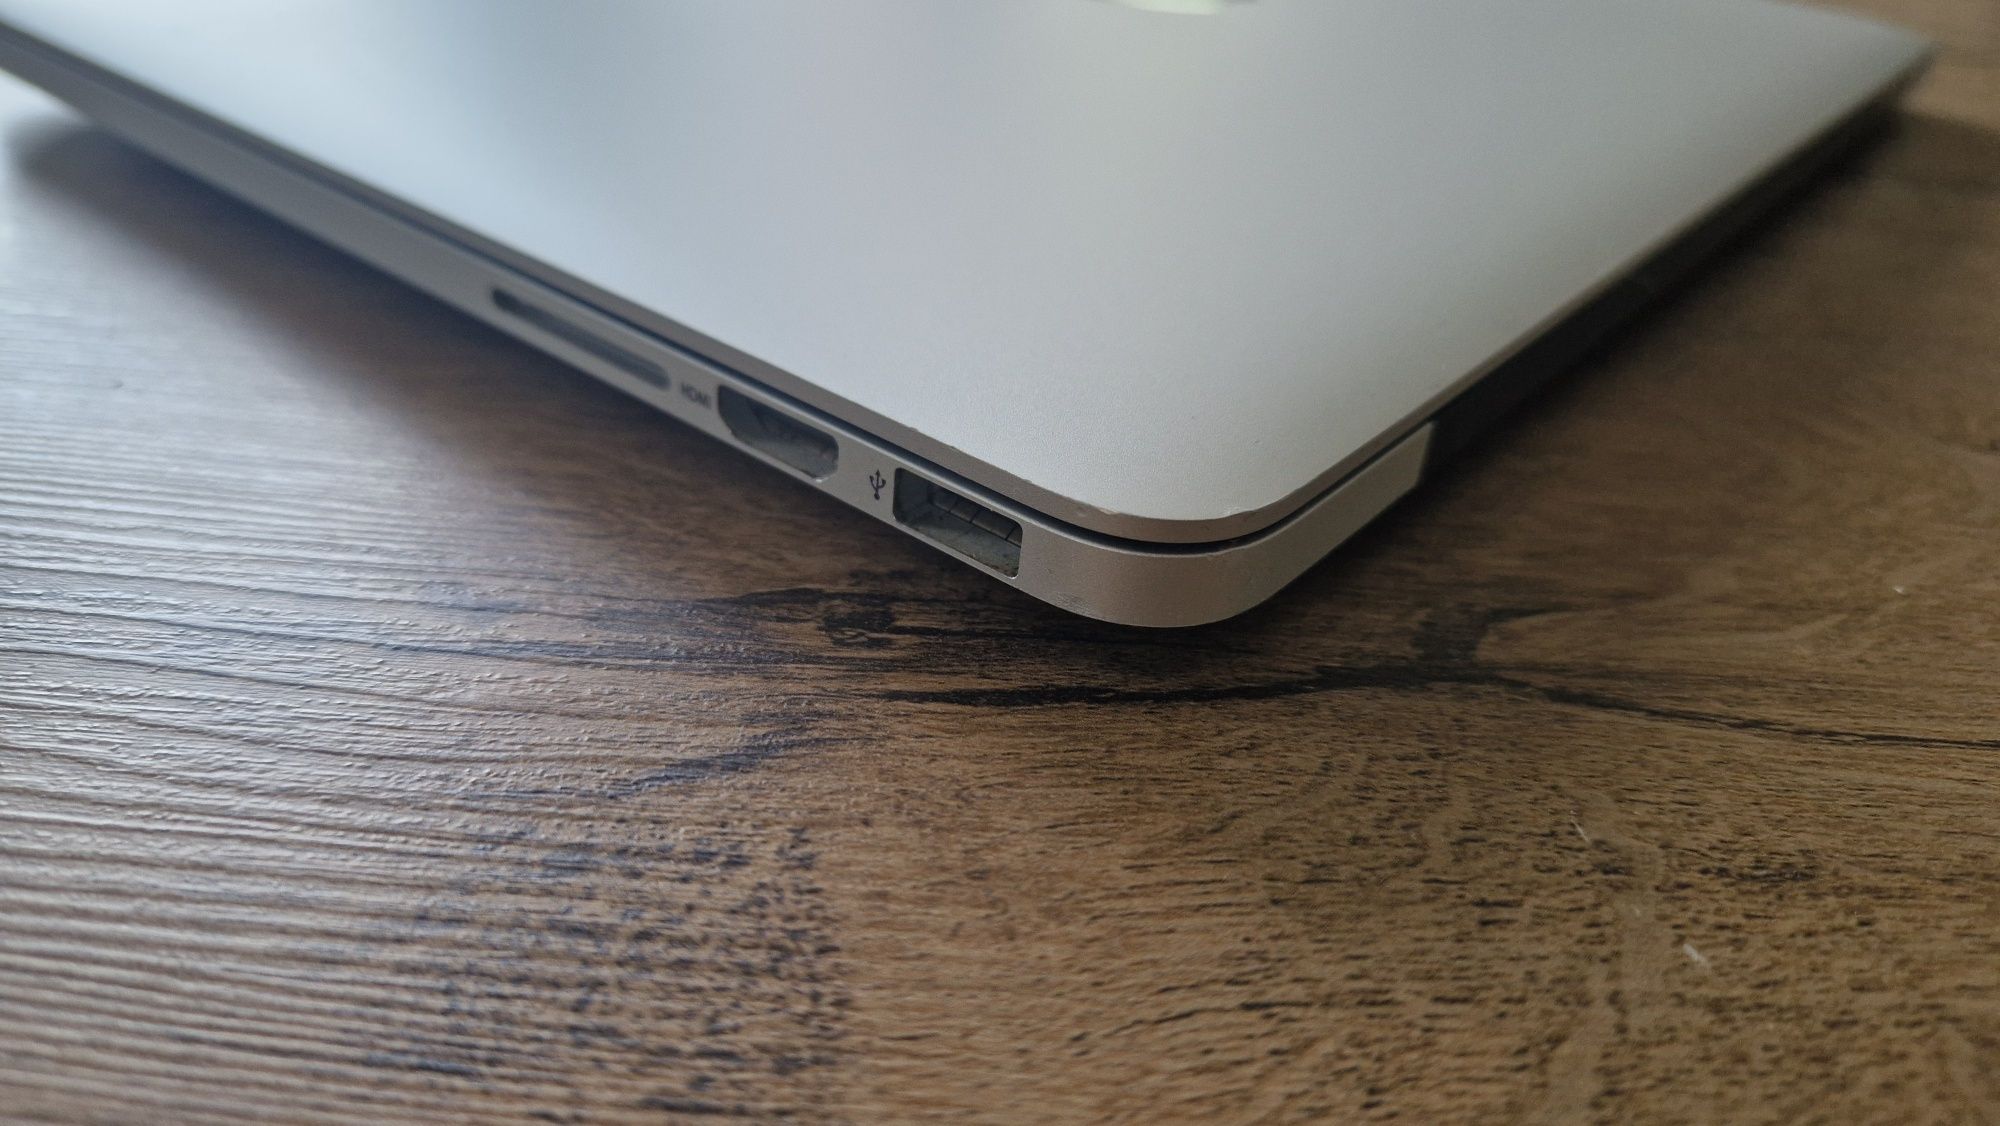 Macbook Pro (Reina, 13-inch, Early 2015)